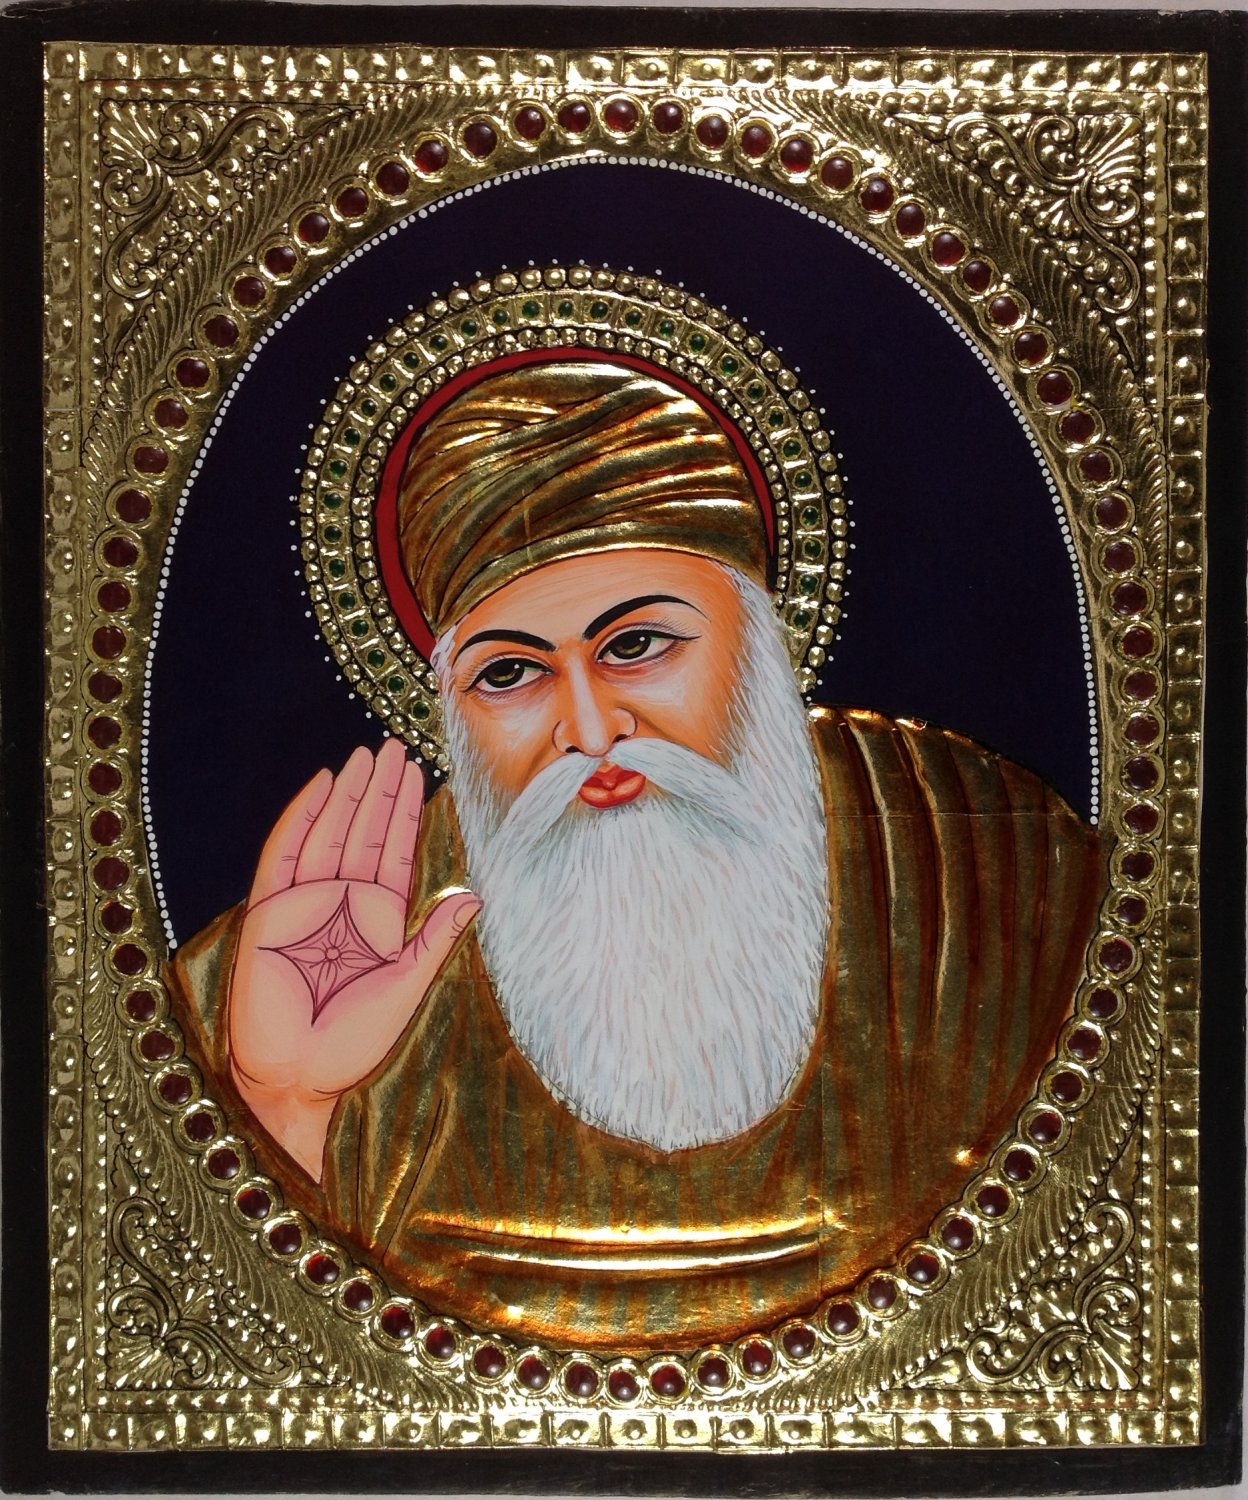 Tanjore Guru Nanak Painting Handmade South India Sikh Thanjavur Relief Art